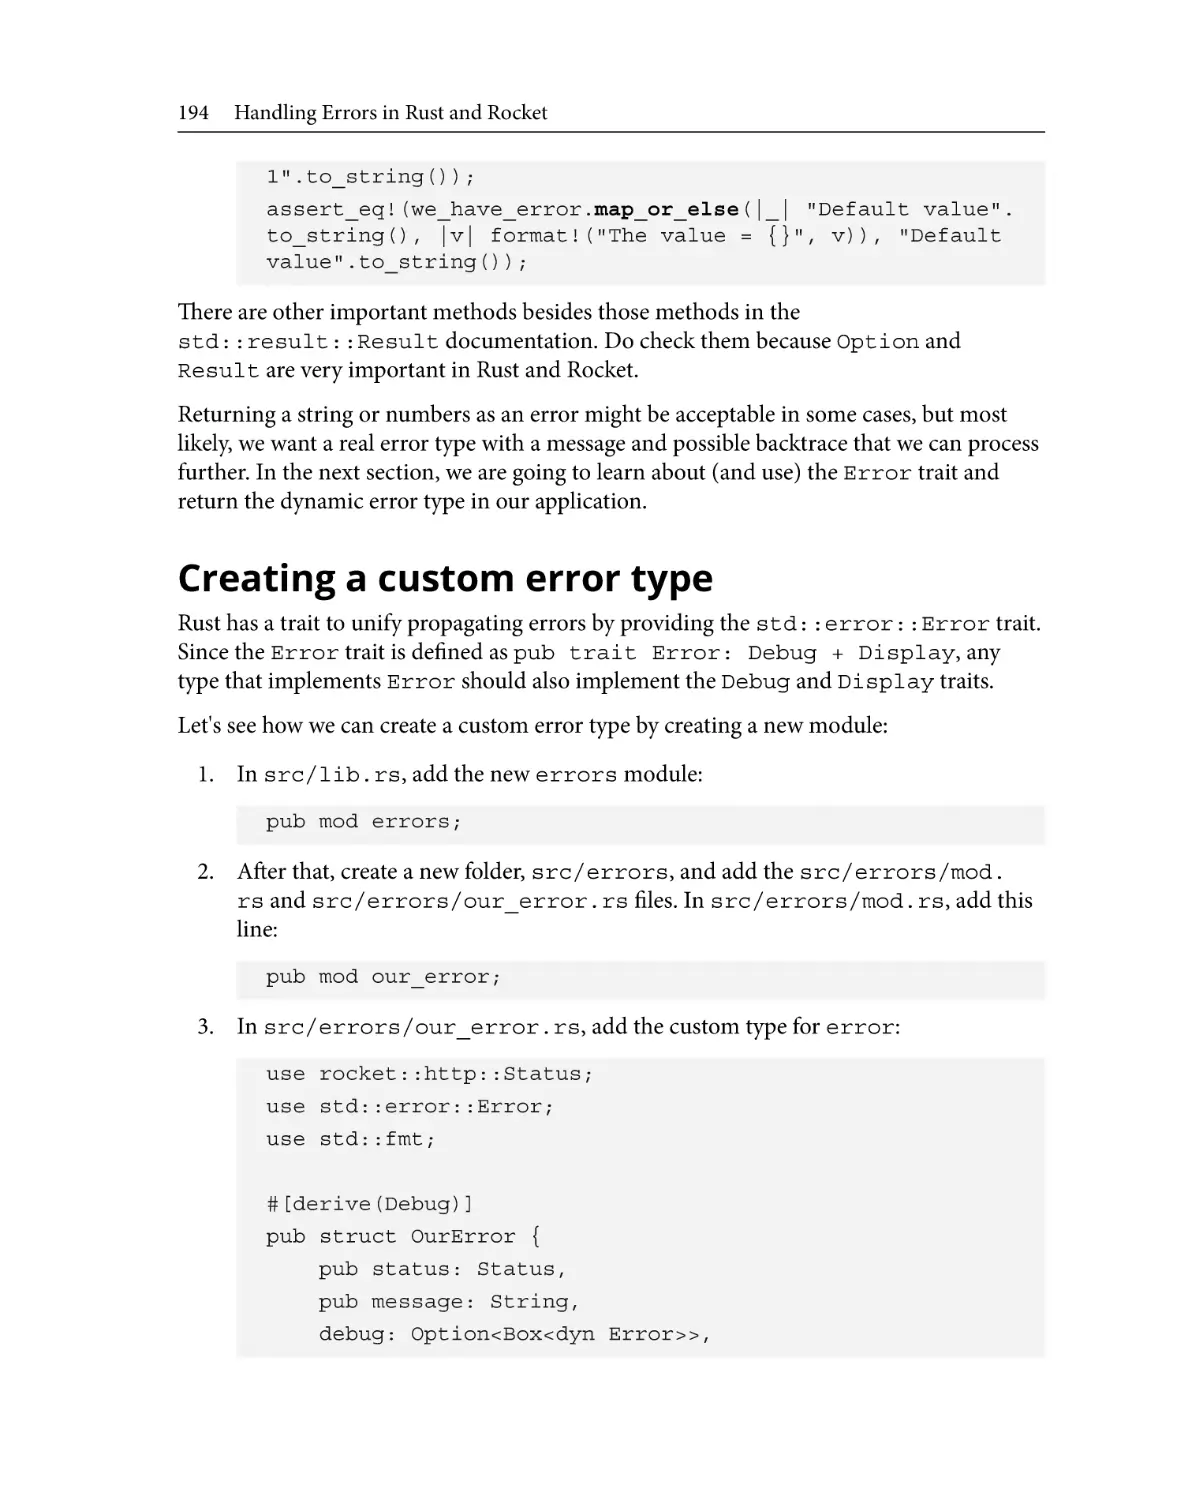 Creating a custom error type